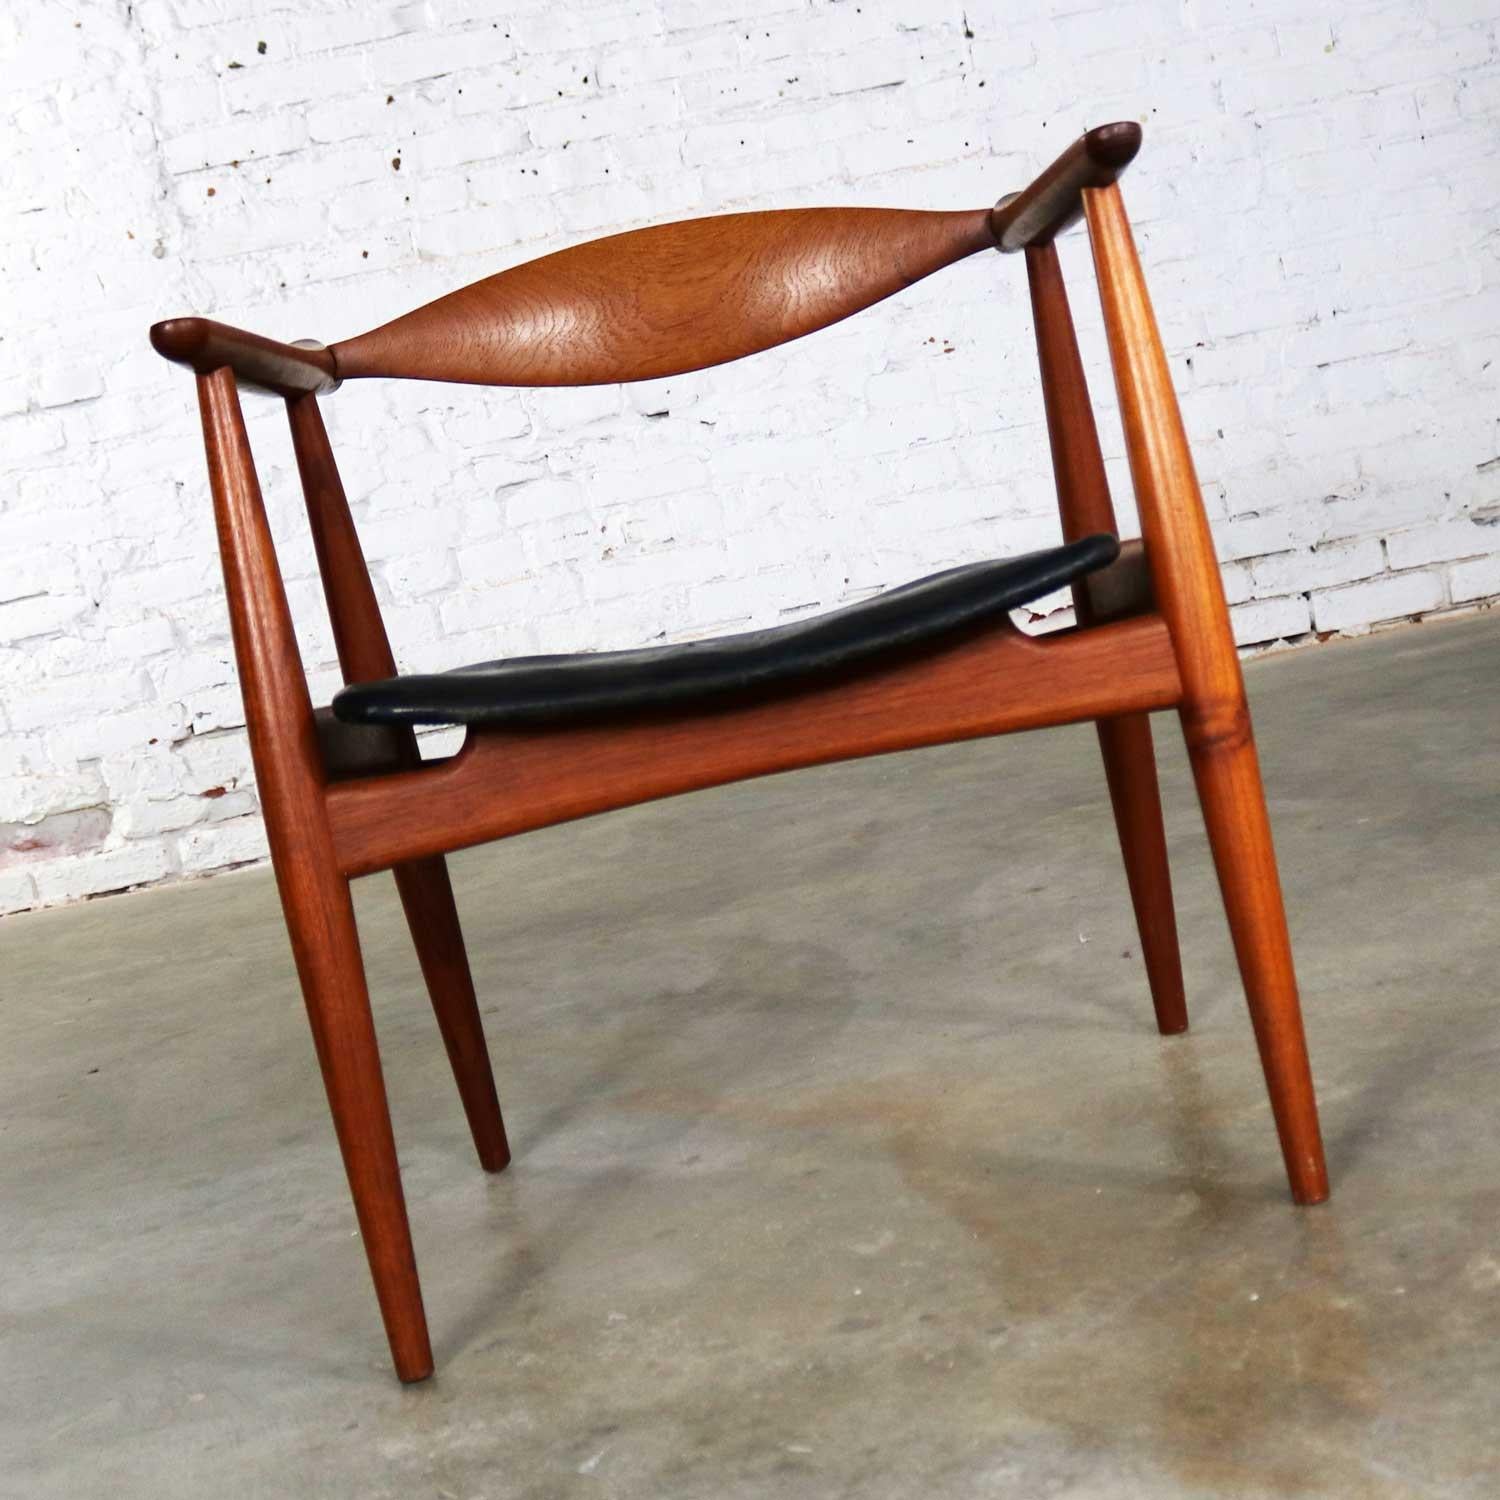 Danish Hans Wegner Teak CH 35 Chair for Carl Hansen & Son Vintage Scandinavian Modern